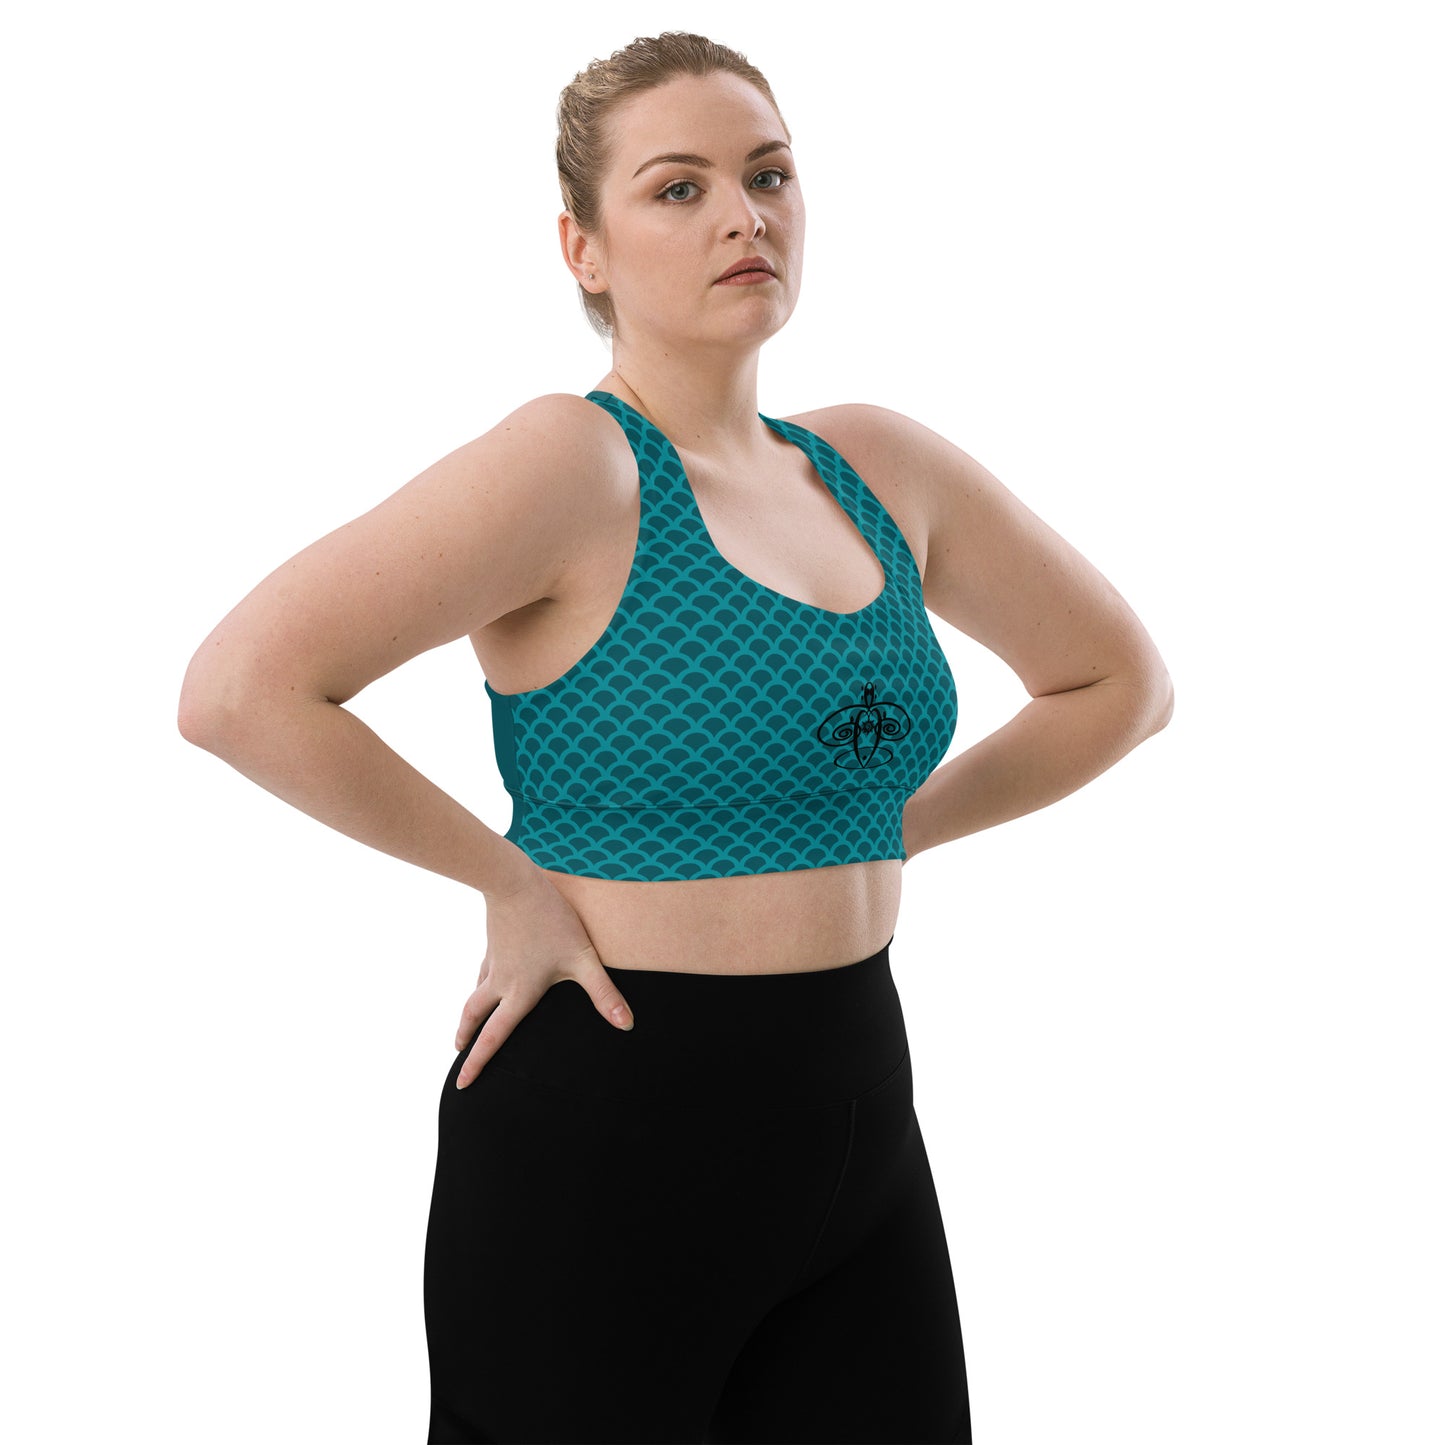 Longline sports bra 2 / Fitness Woman's bra.